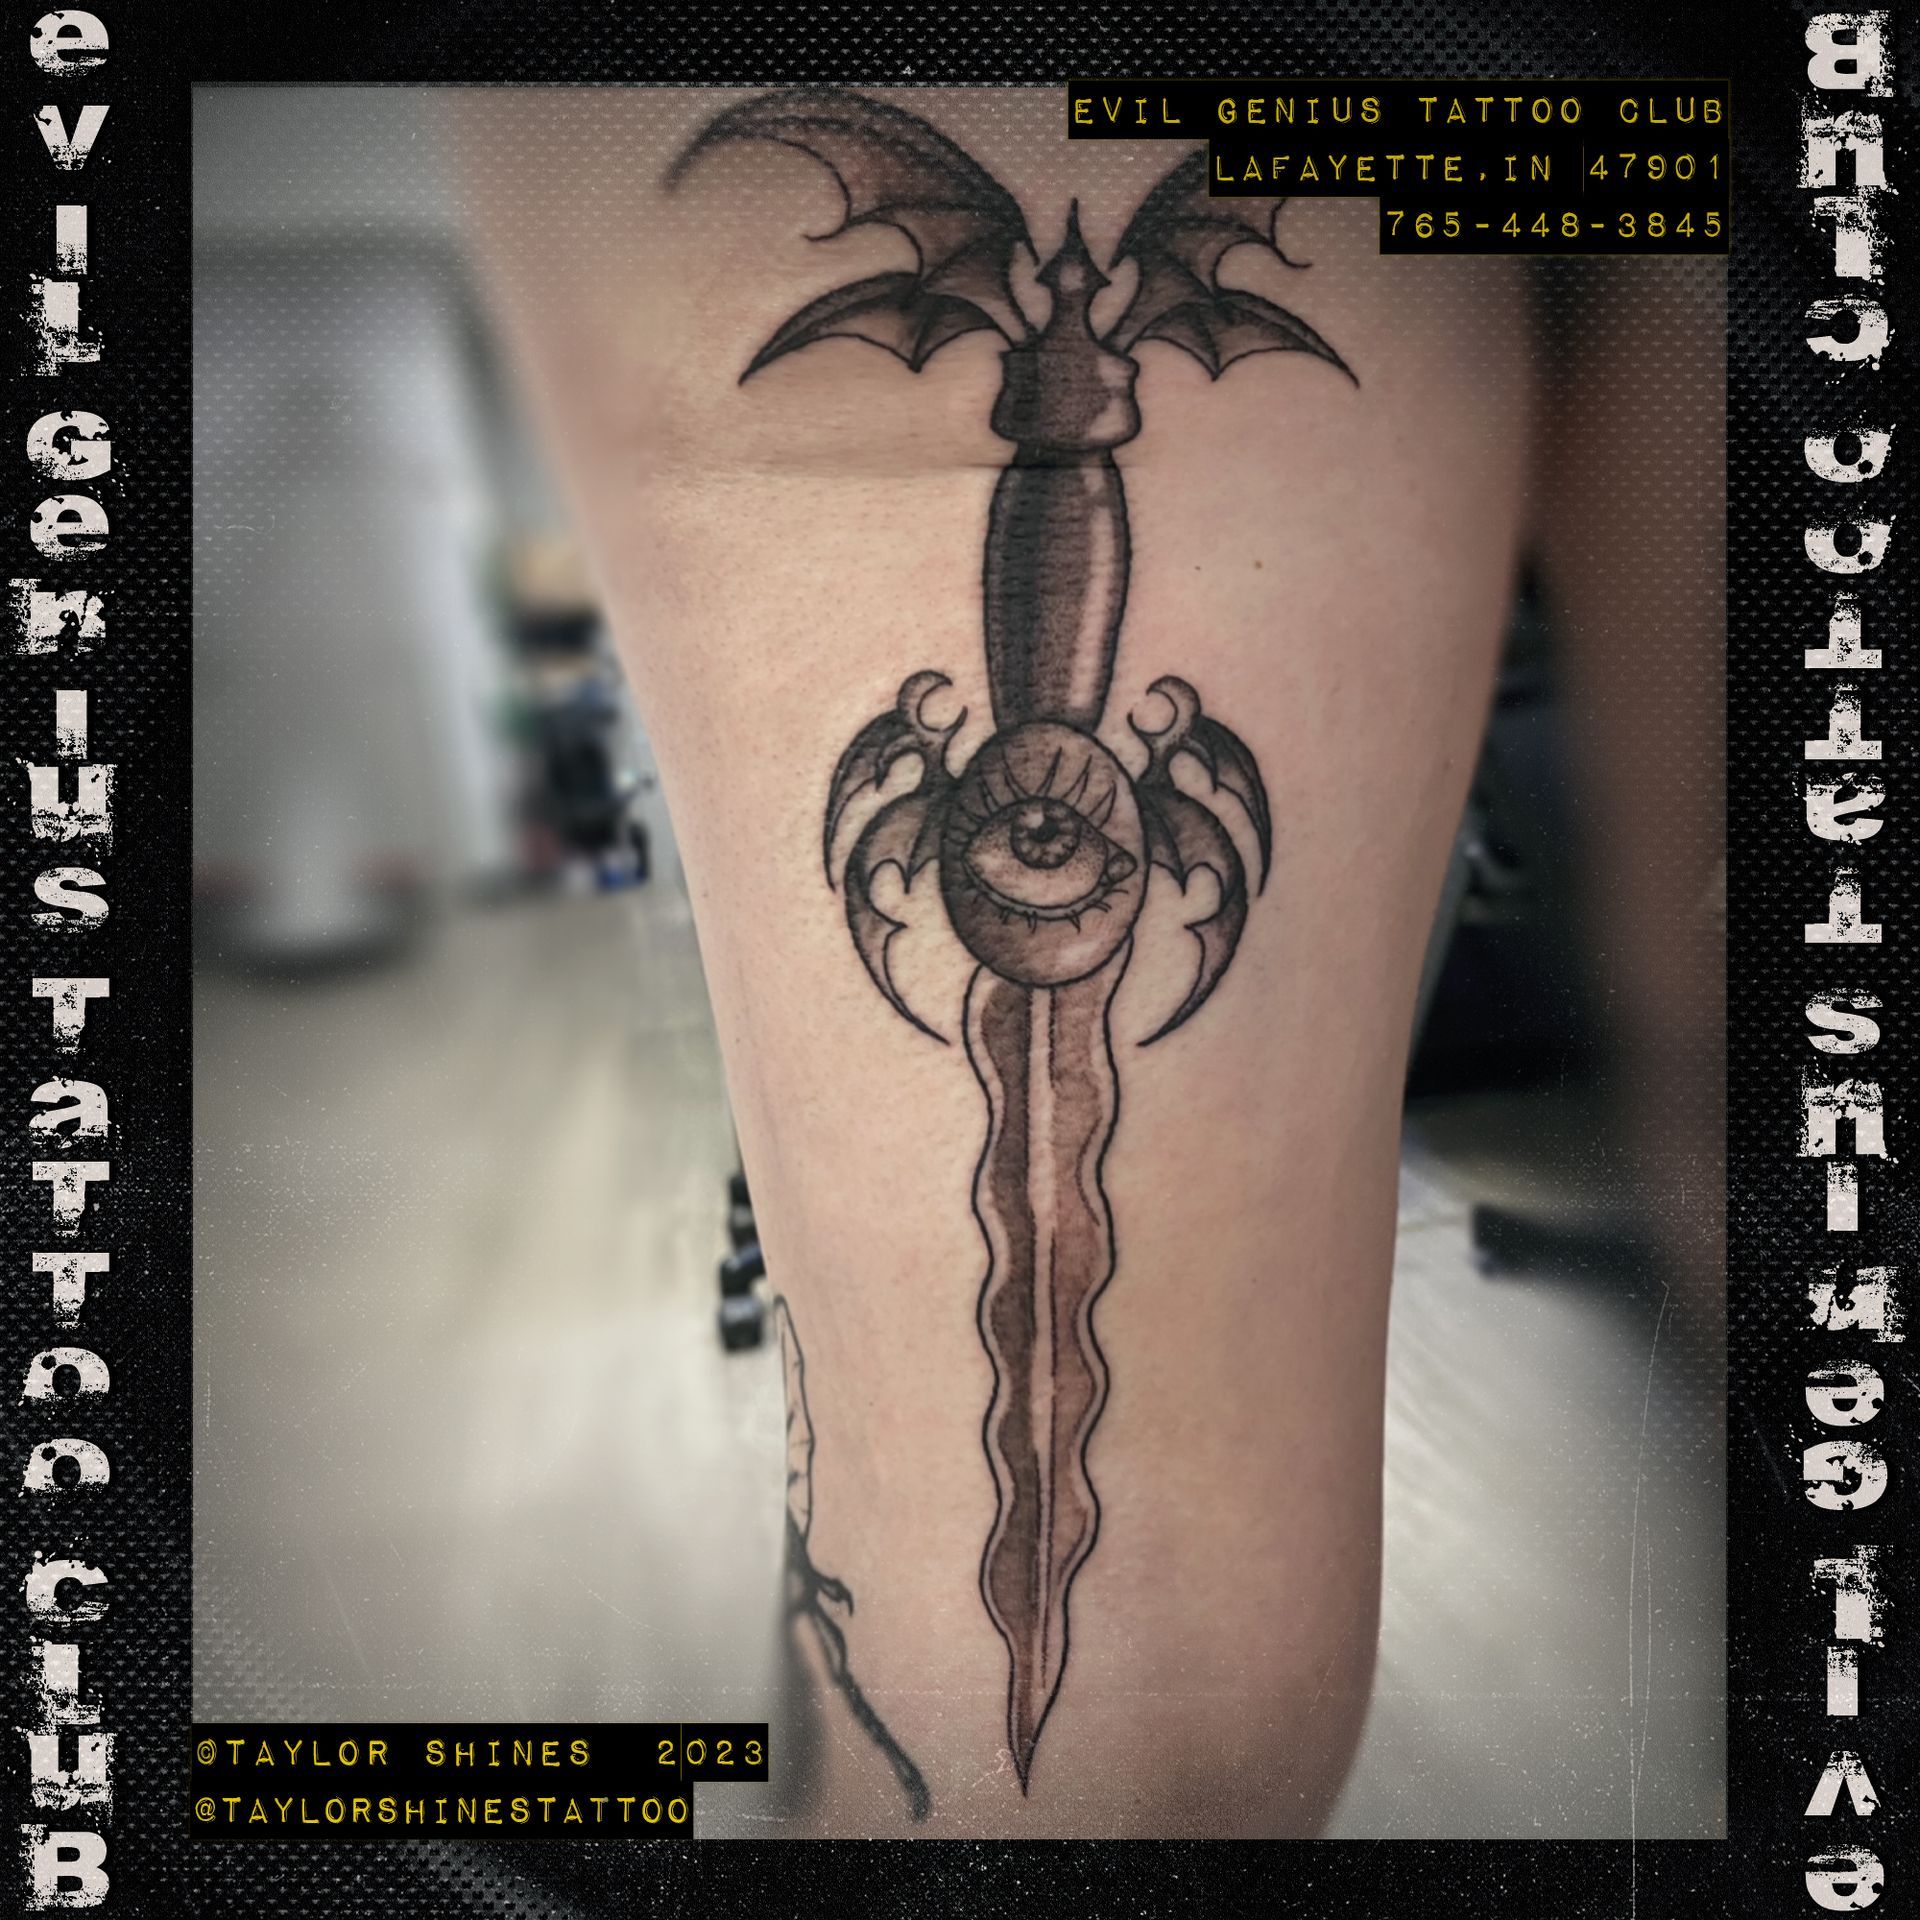 Taylor Shines winged dagger tattoo